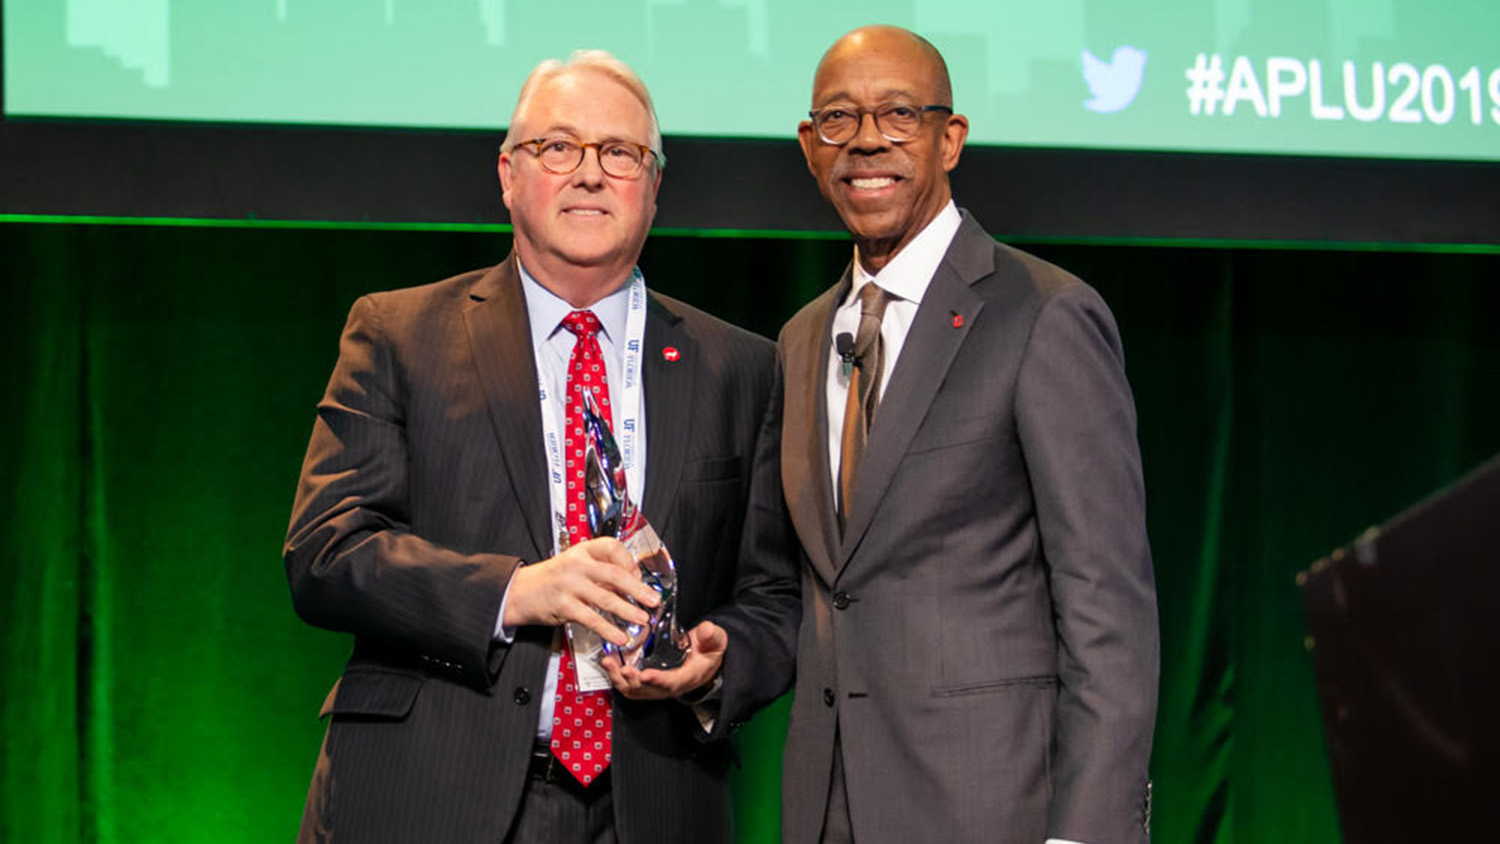 Chancellor Randy Woodson accepts the IEP Economic Engagement Connections award.